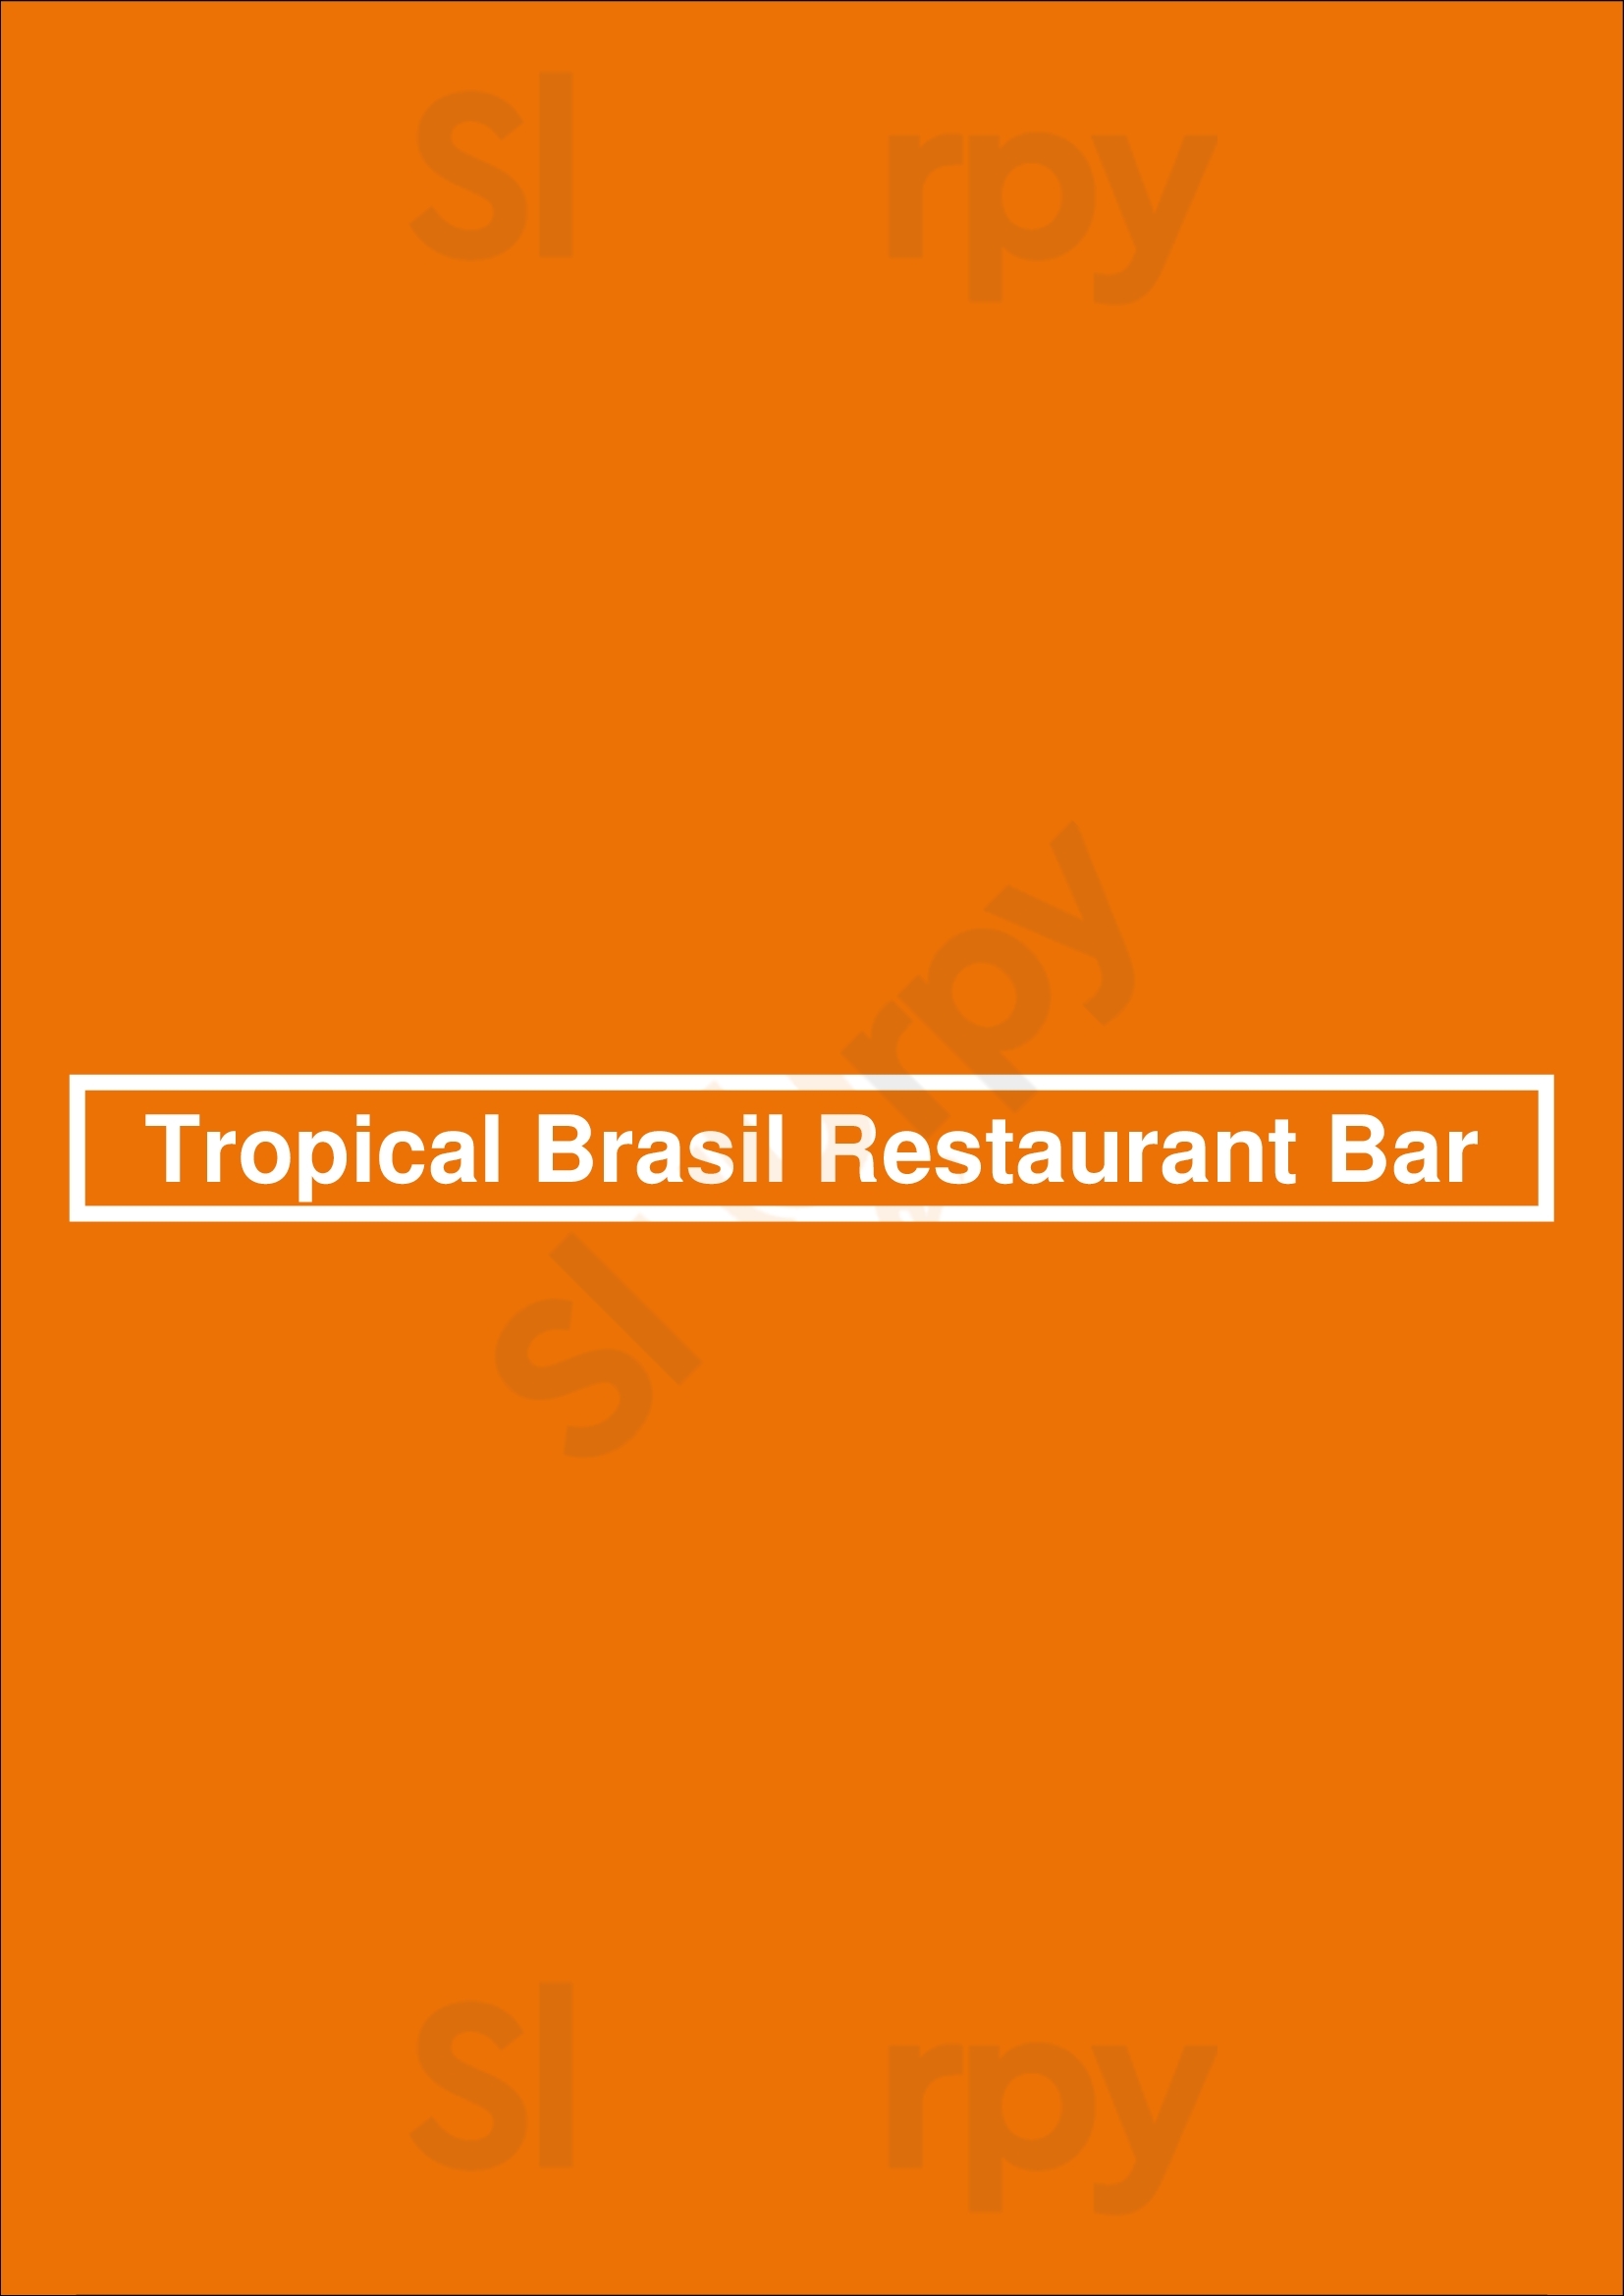 Tropical Brasil Restaurant Bar Amsterdam Menu - 1